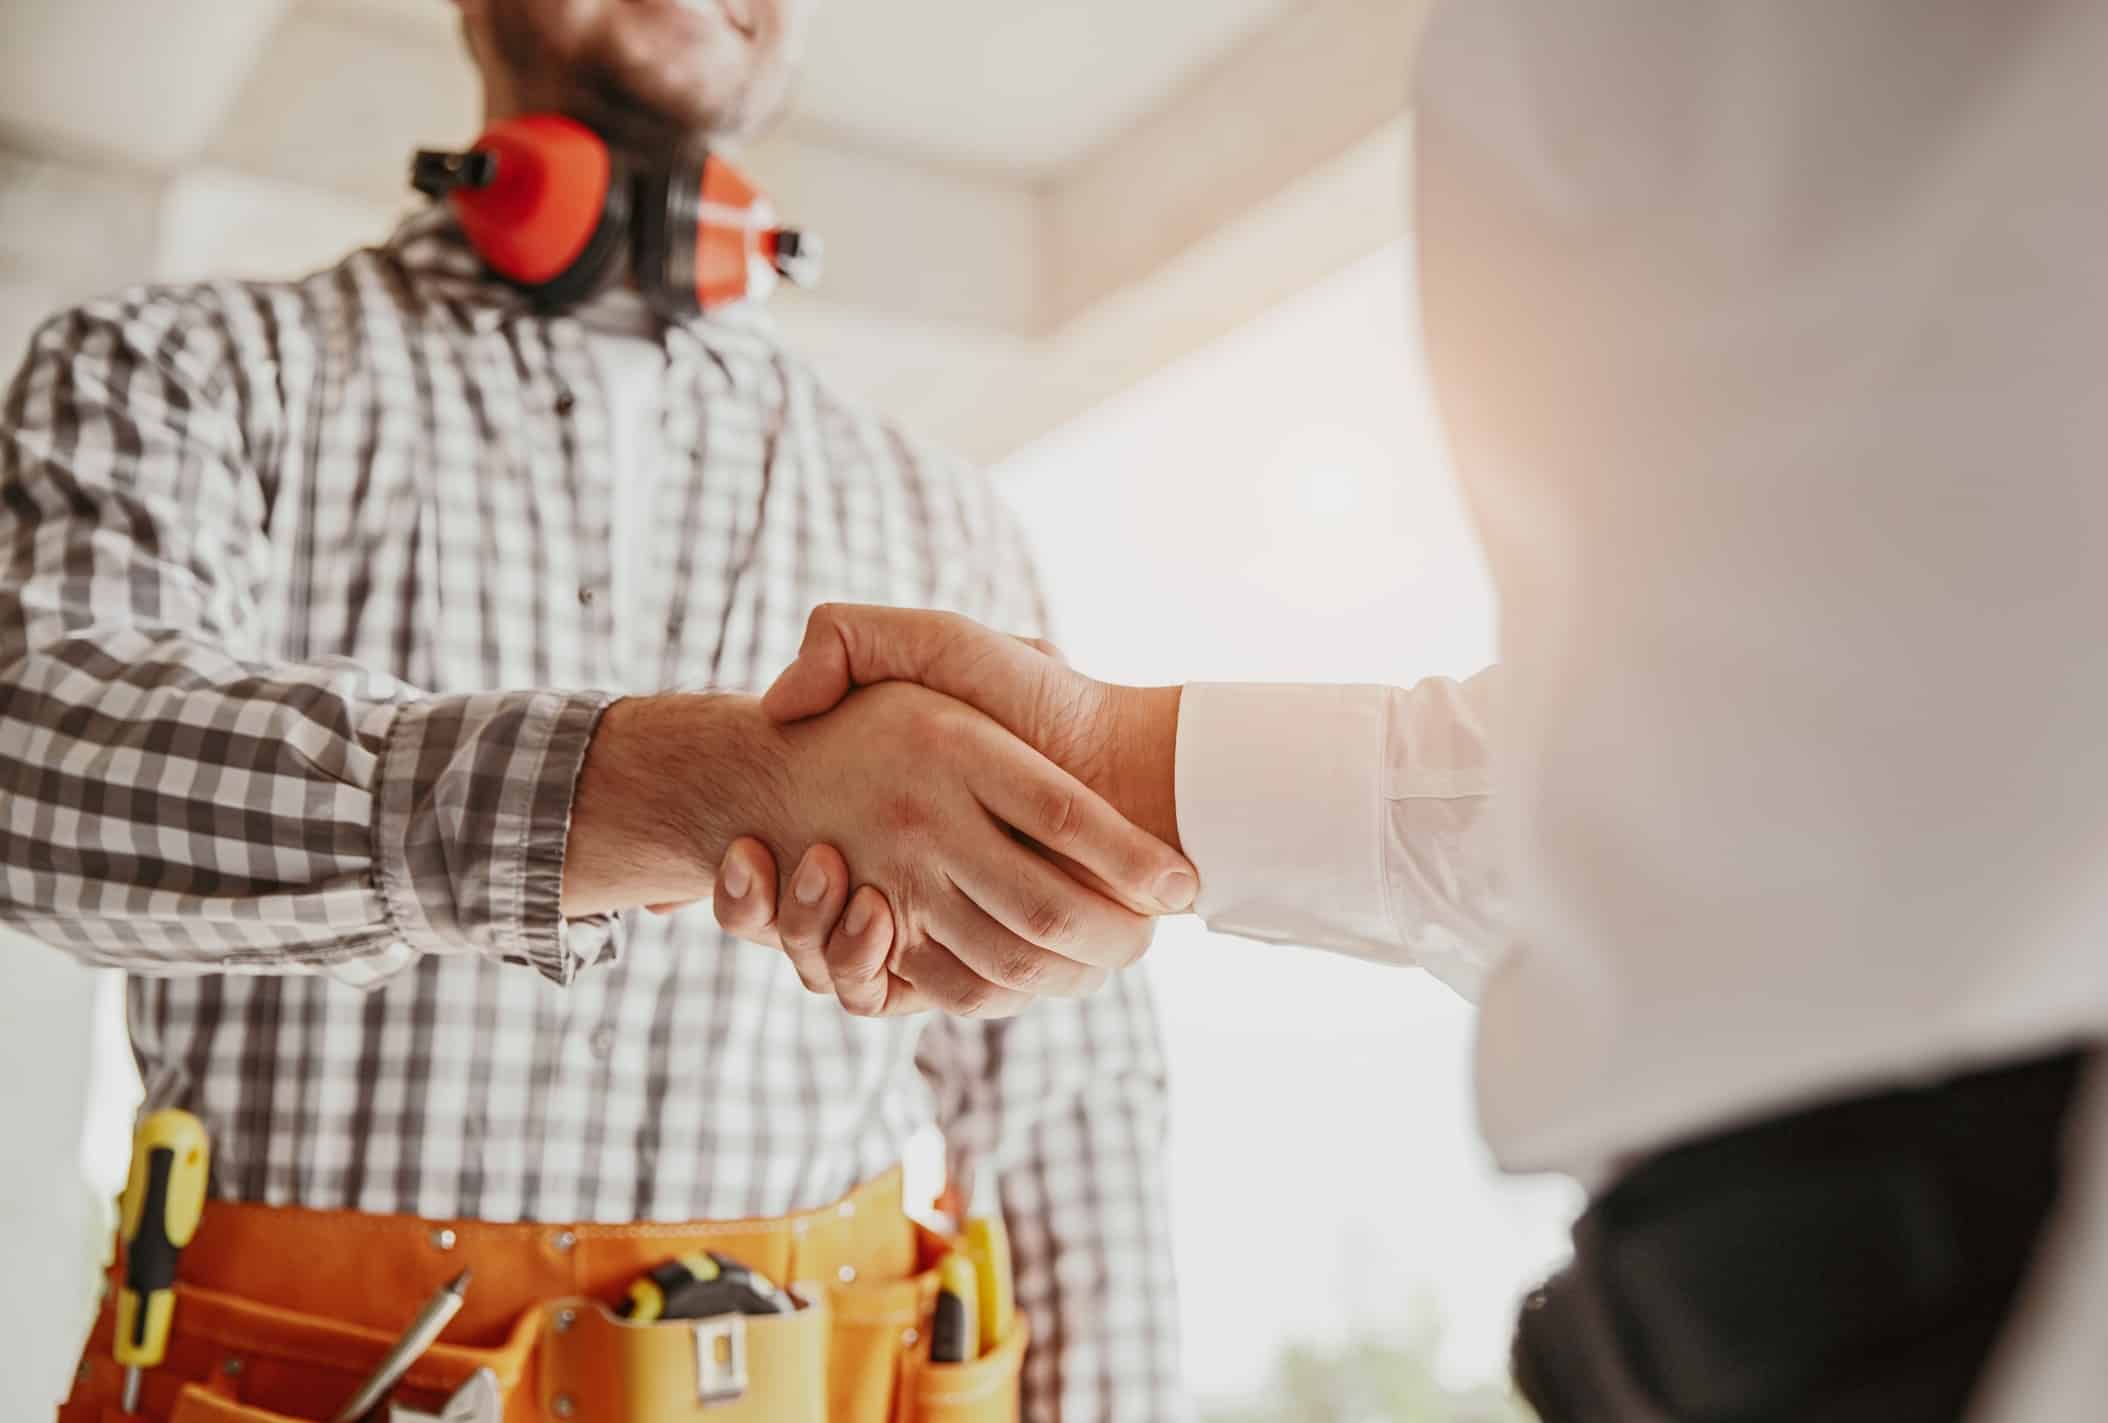 Contractor shaking hands with avid DIYer